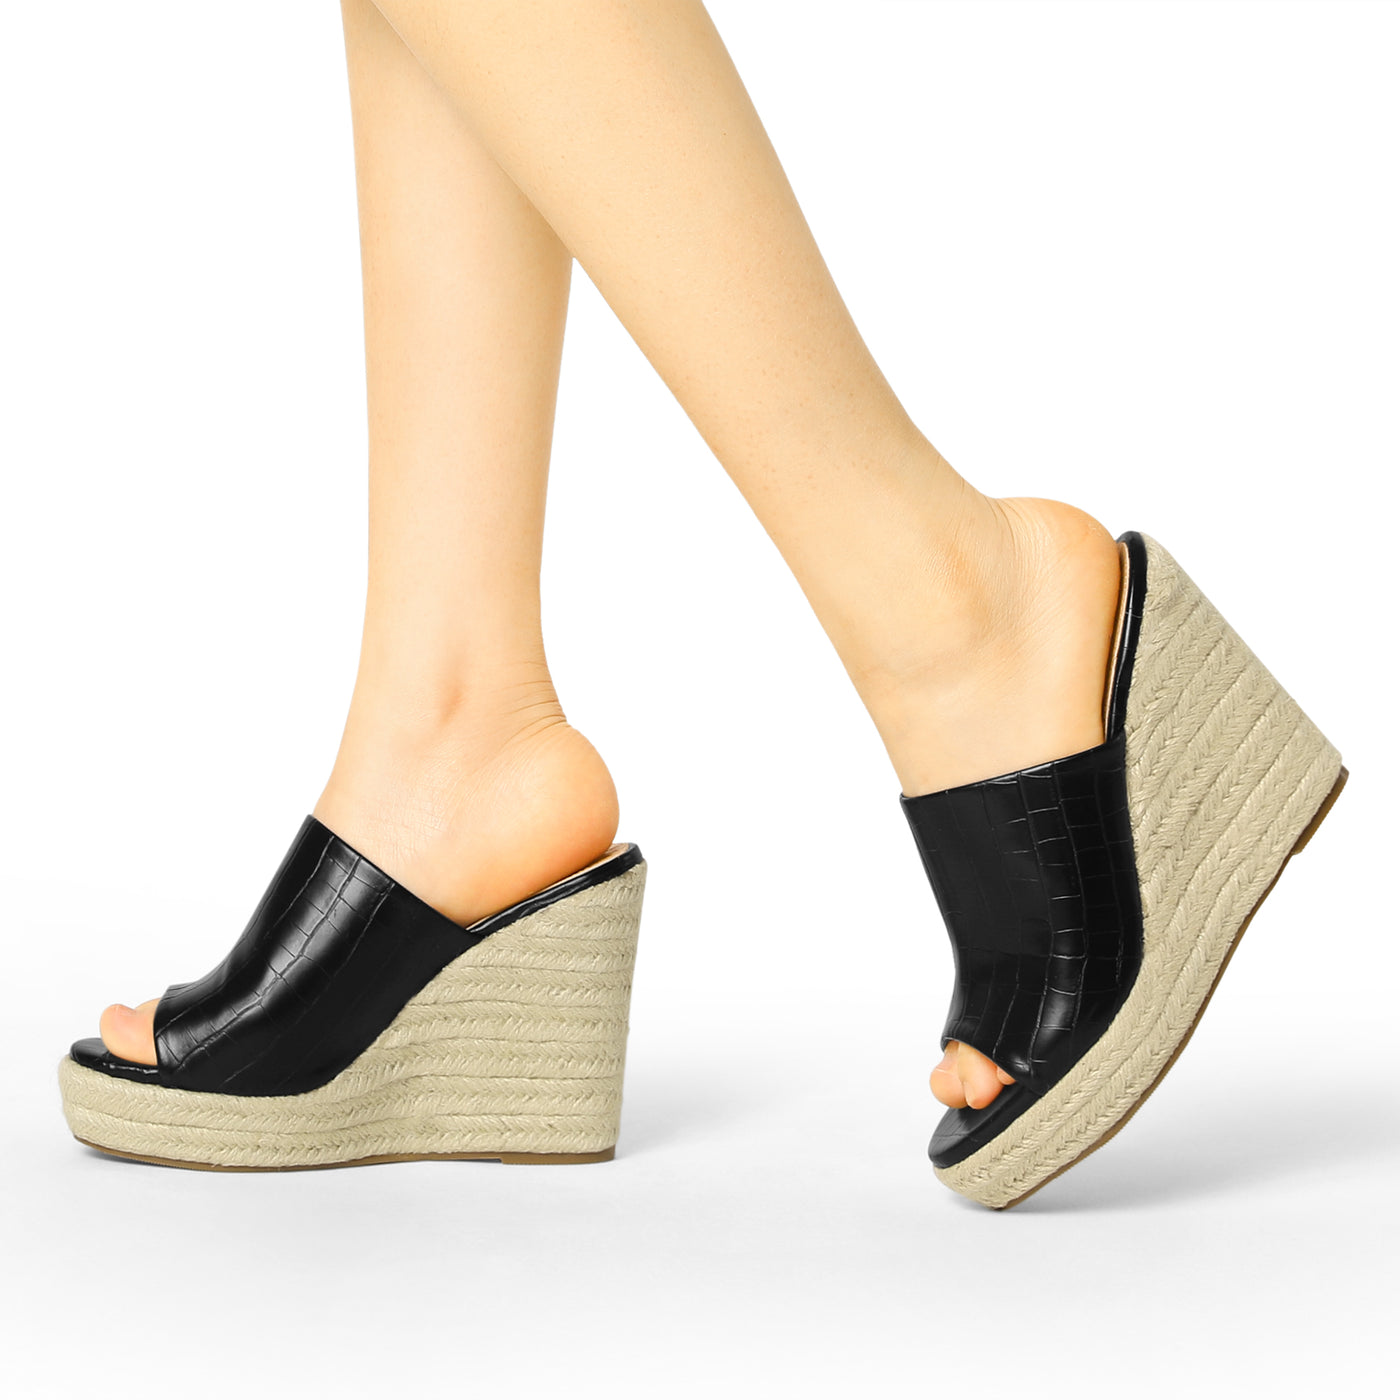 Allegra K Women's Espadrilles Wedges Wedge Sandals